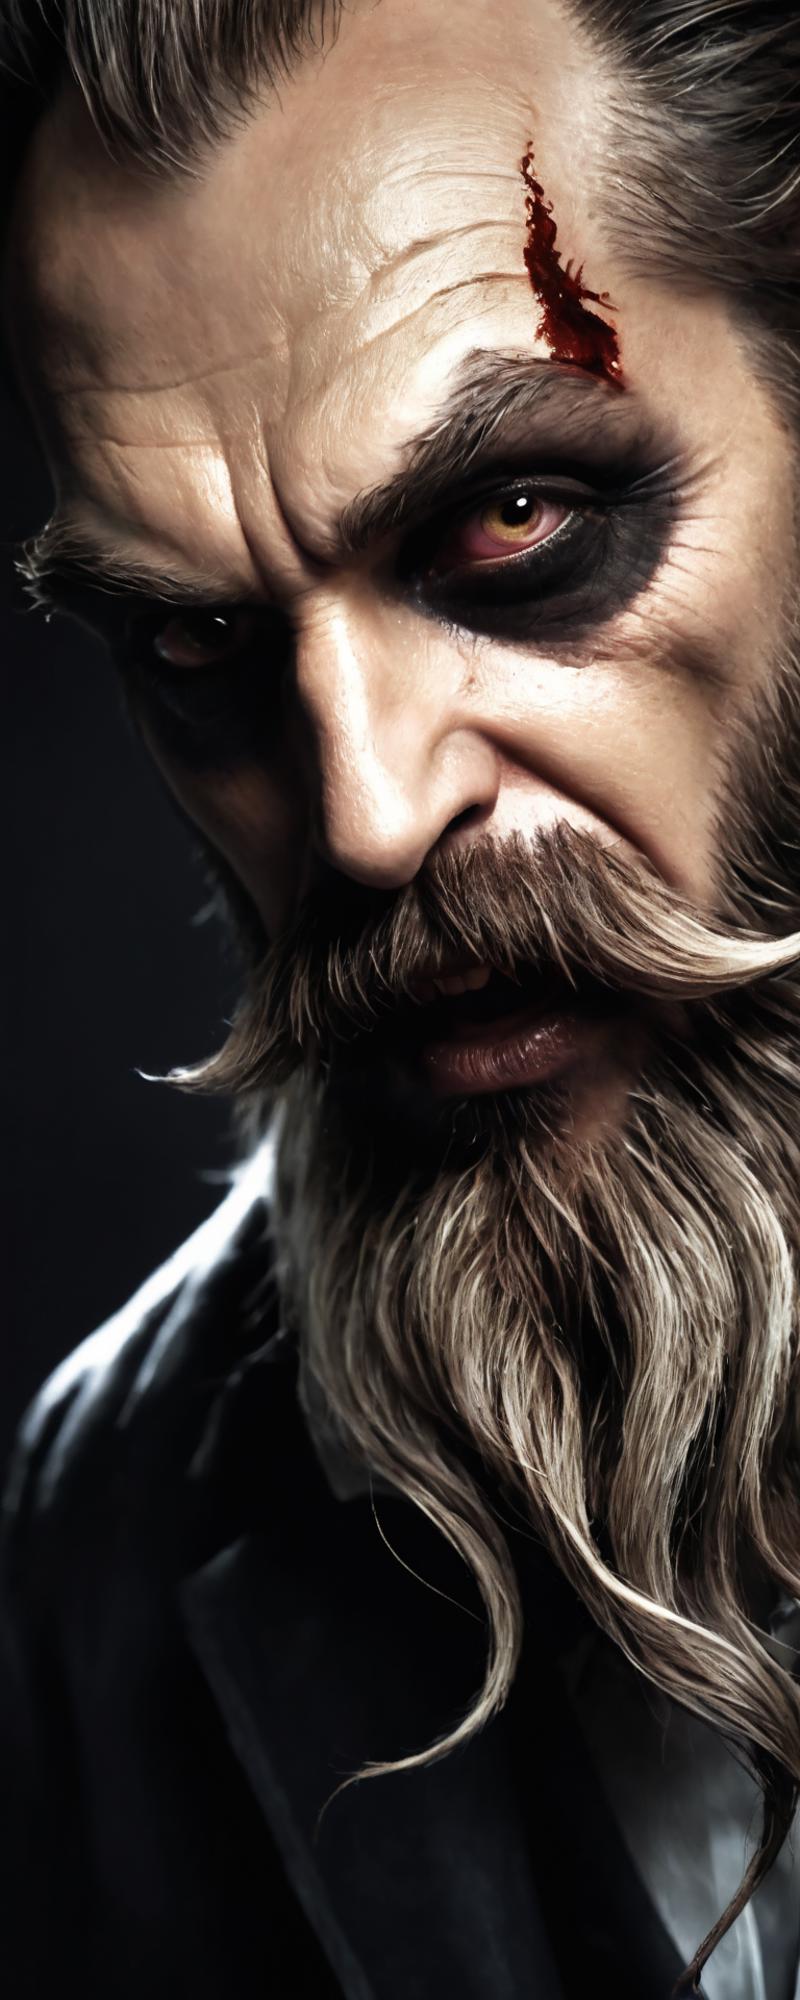 SDXL - Epic Beard, Mustache & Hair image by rklaffehn